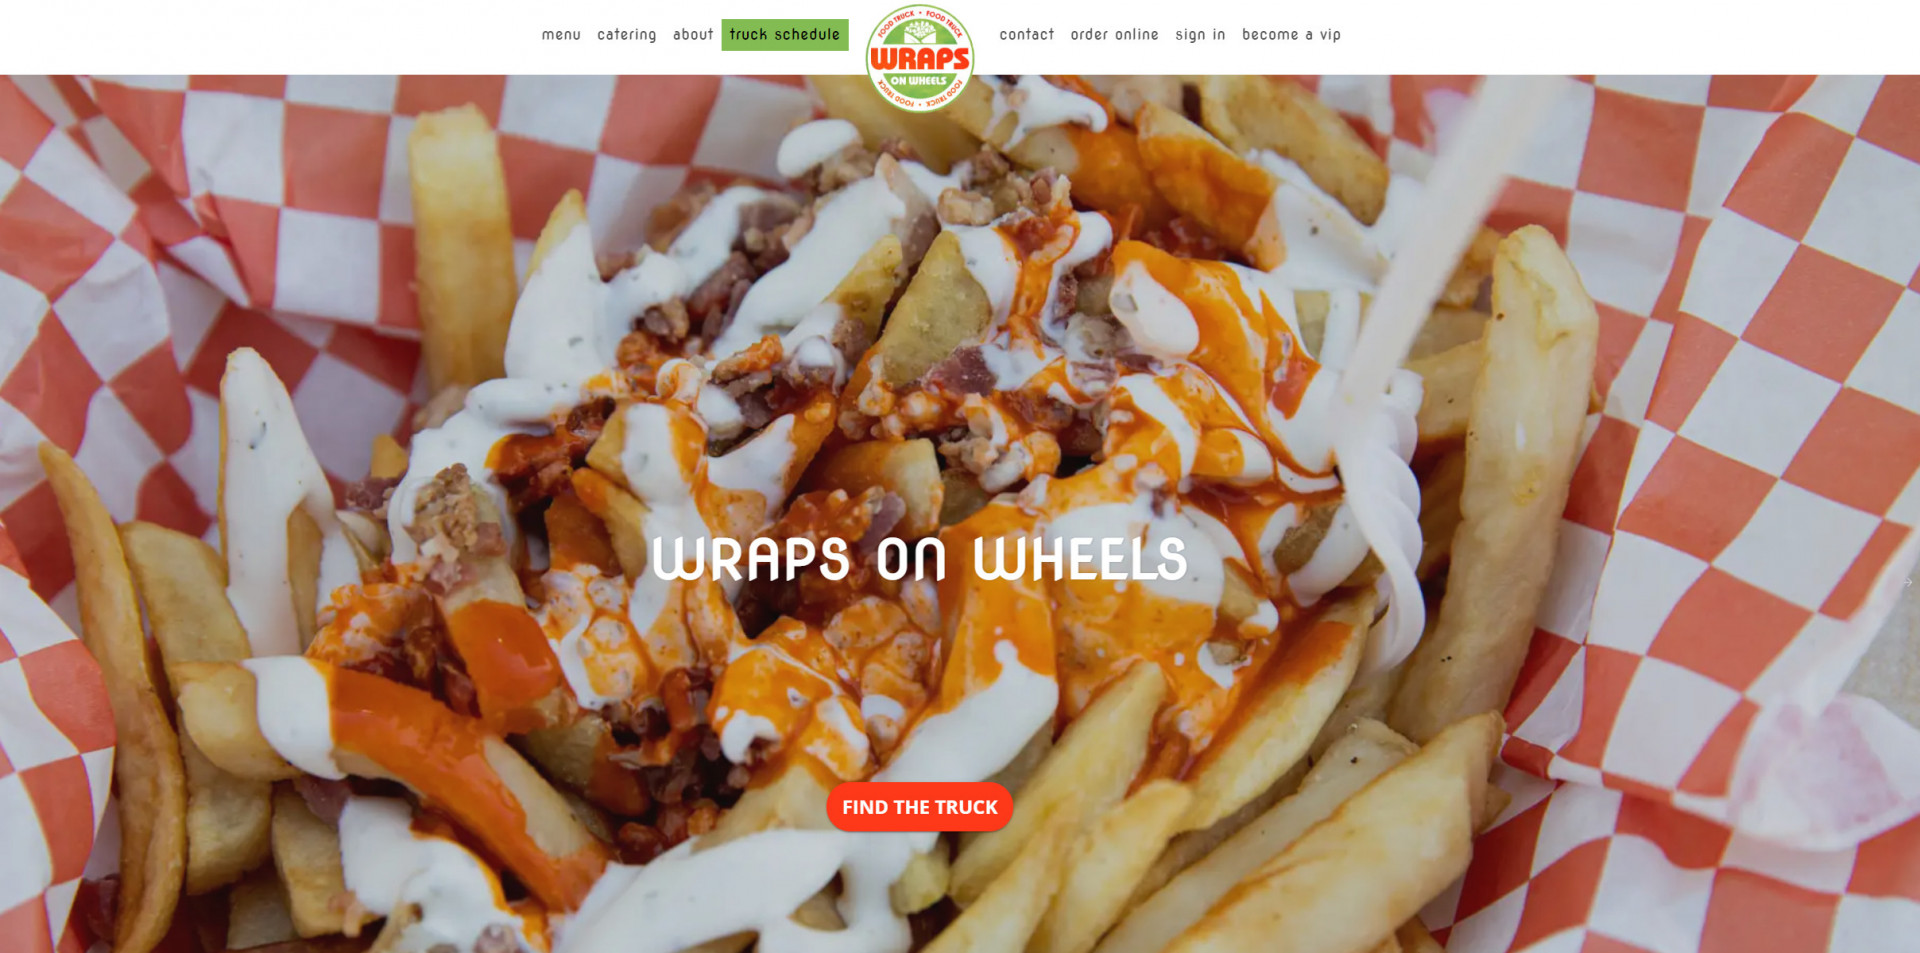 The best restaurant web design example for food trucks